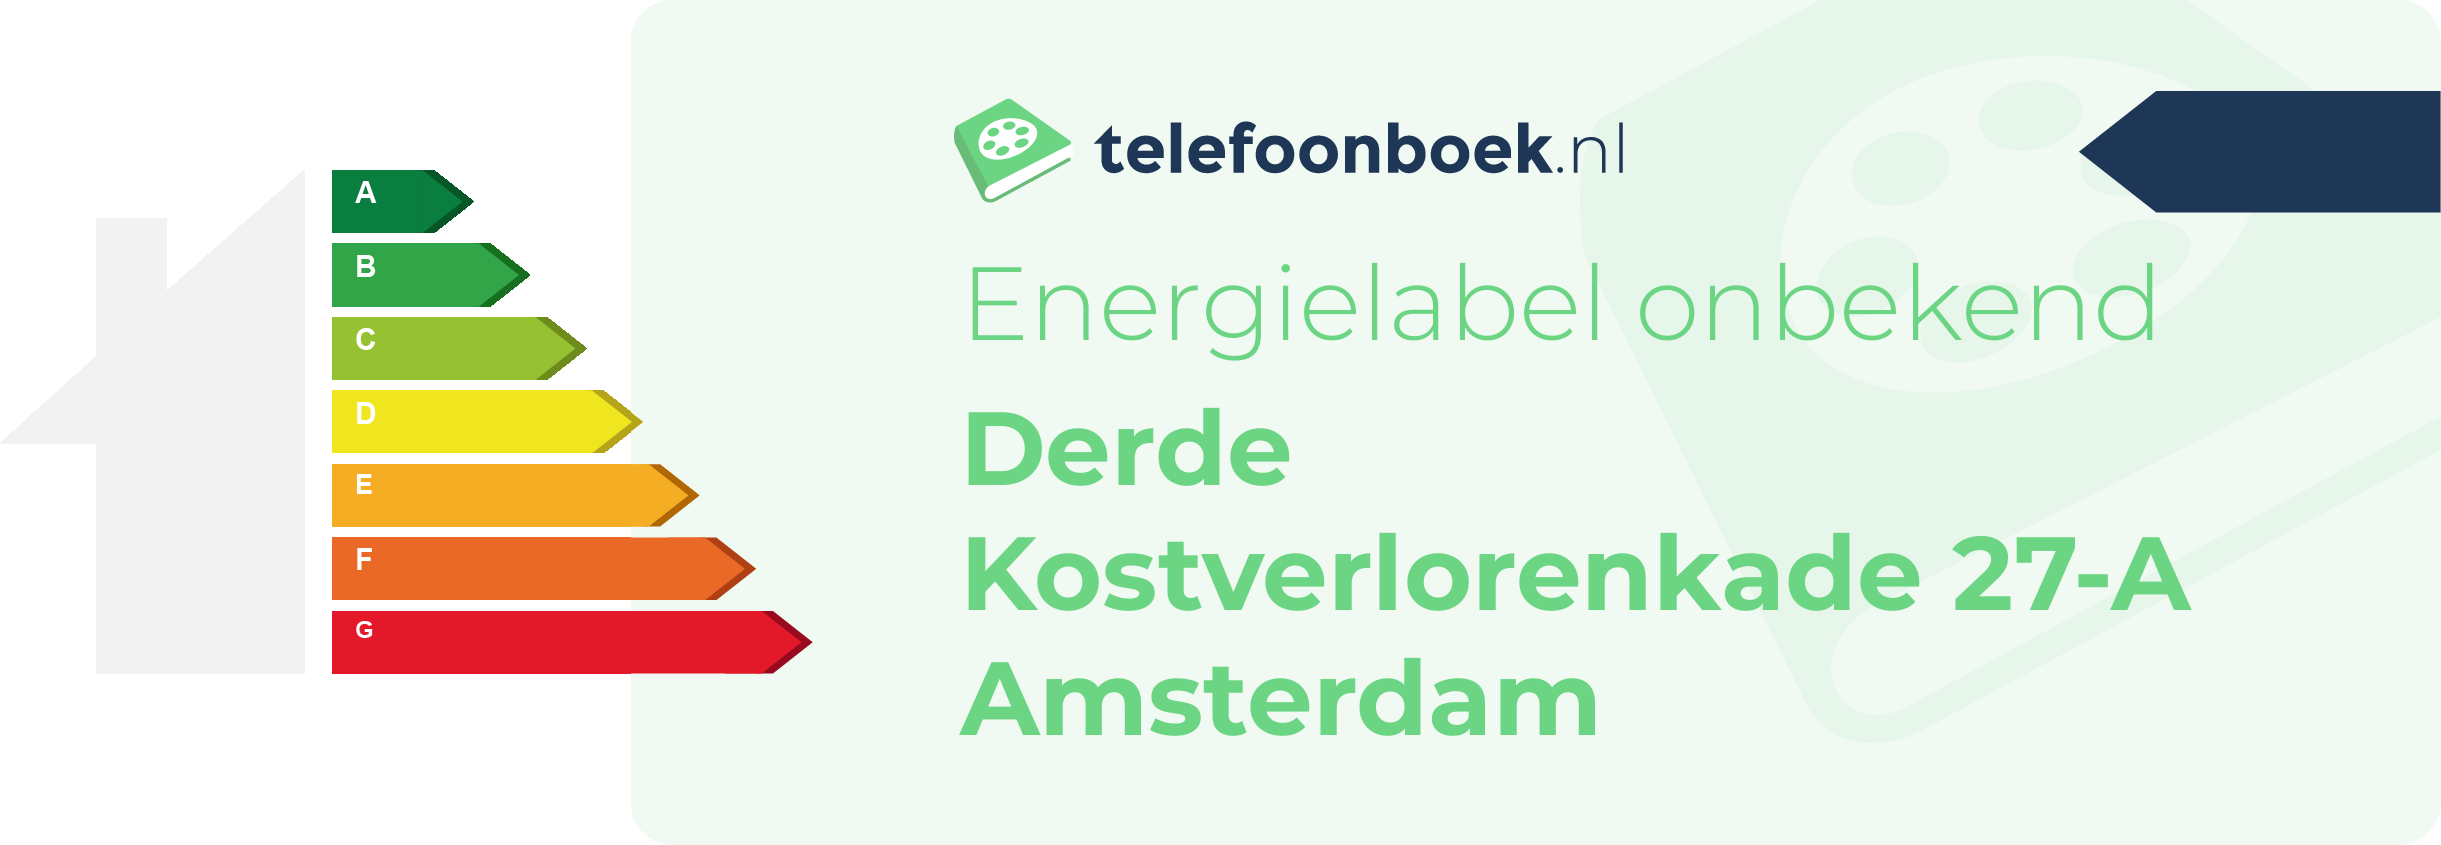 Energielabel Derde Kostverlorenkade 27-A Amsterdam